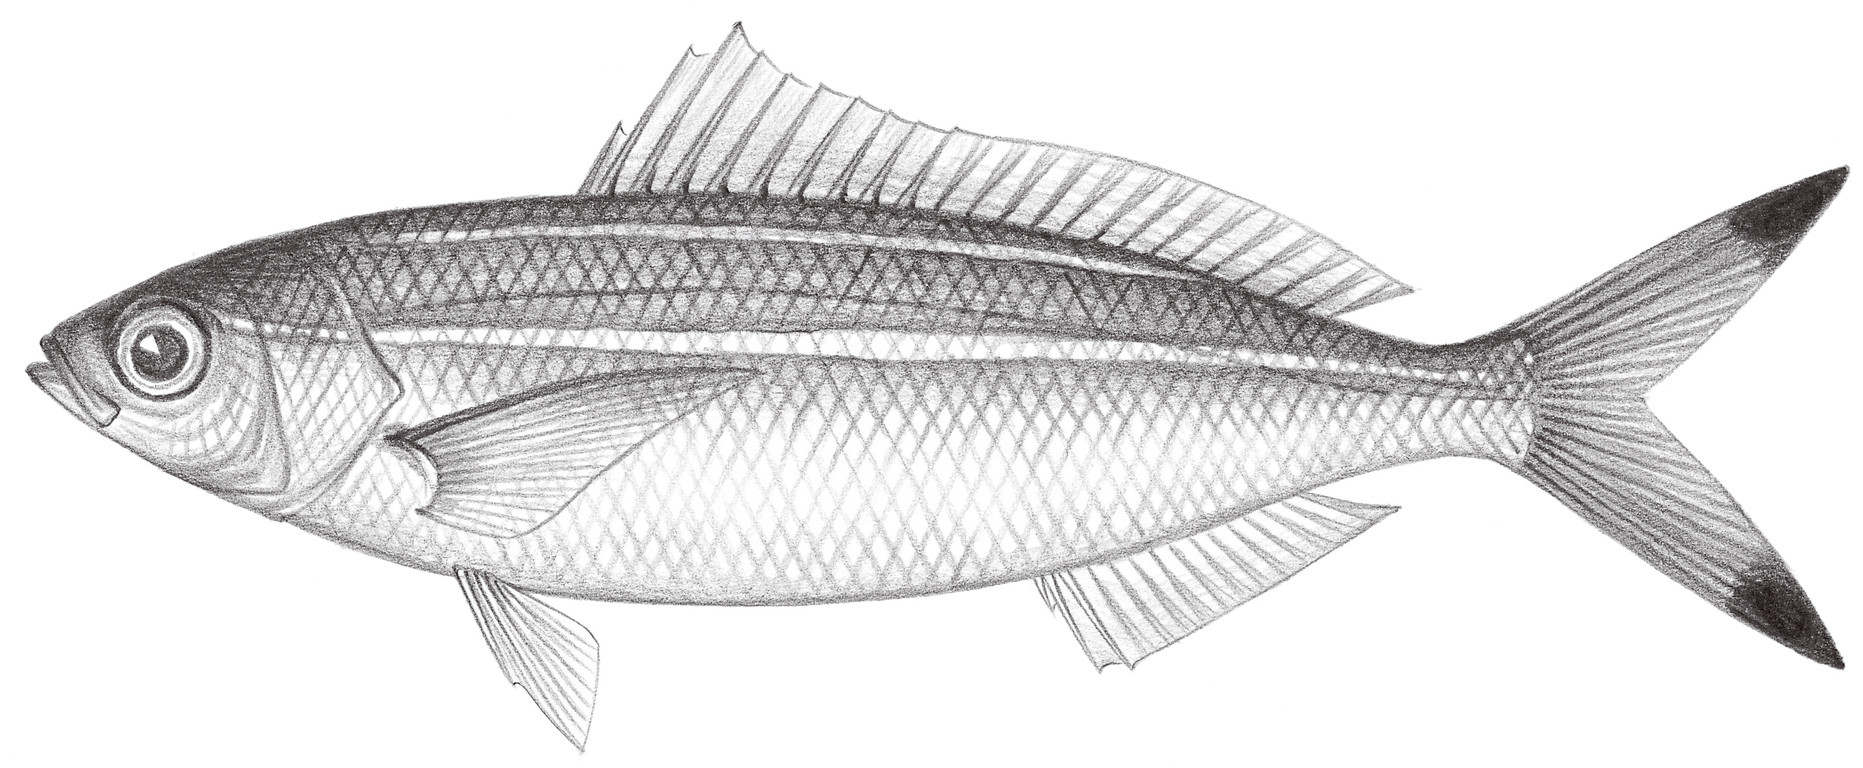 1366.	雙帶鰭梅鯛 Pterocaesio digramma (Bleeker, 1865)